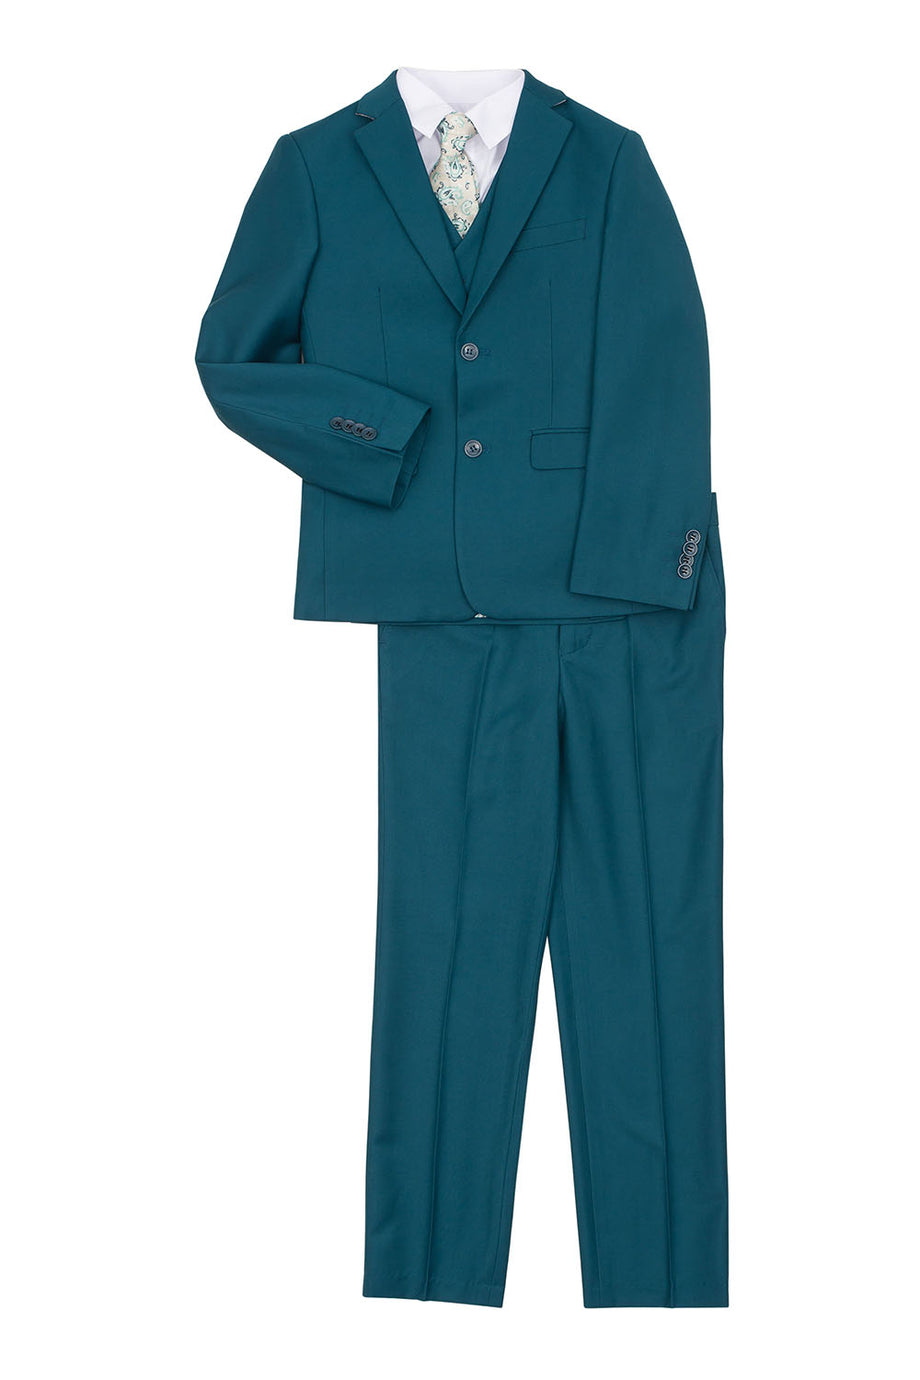 "Austin" Kids Teal 5-Piece Suit (Geoffrey Beene / AXNY)